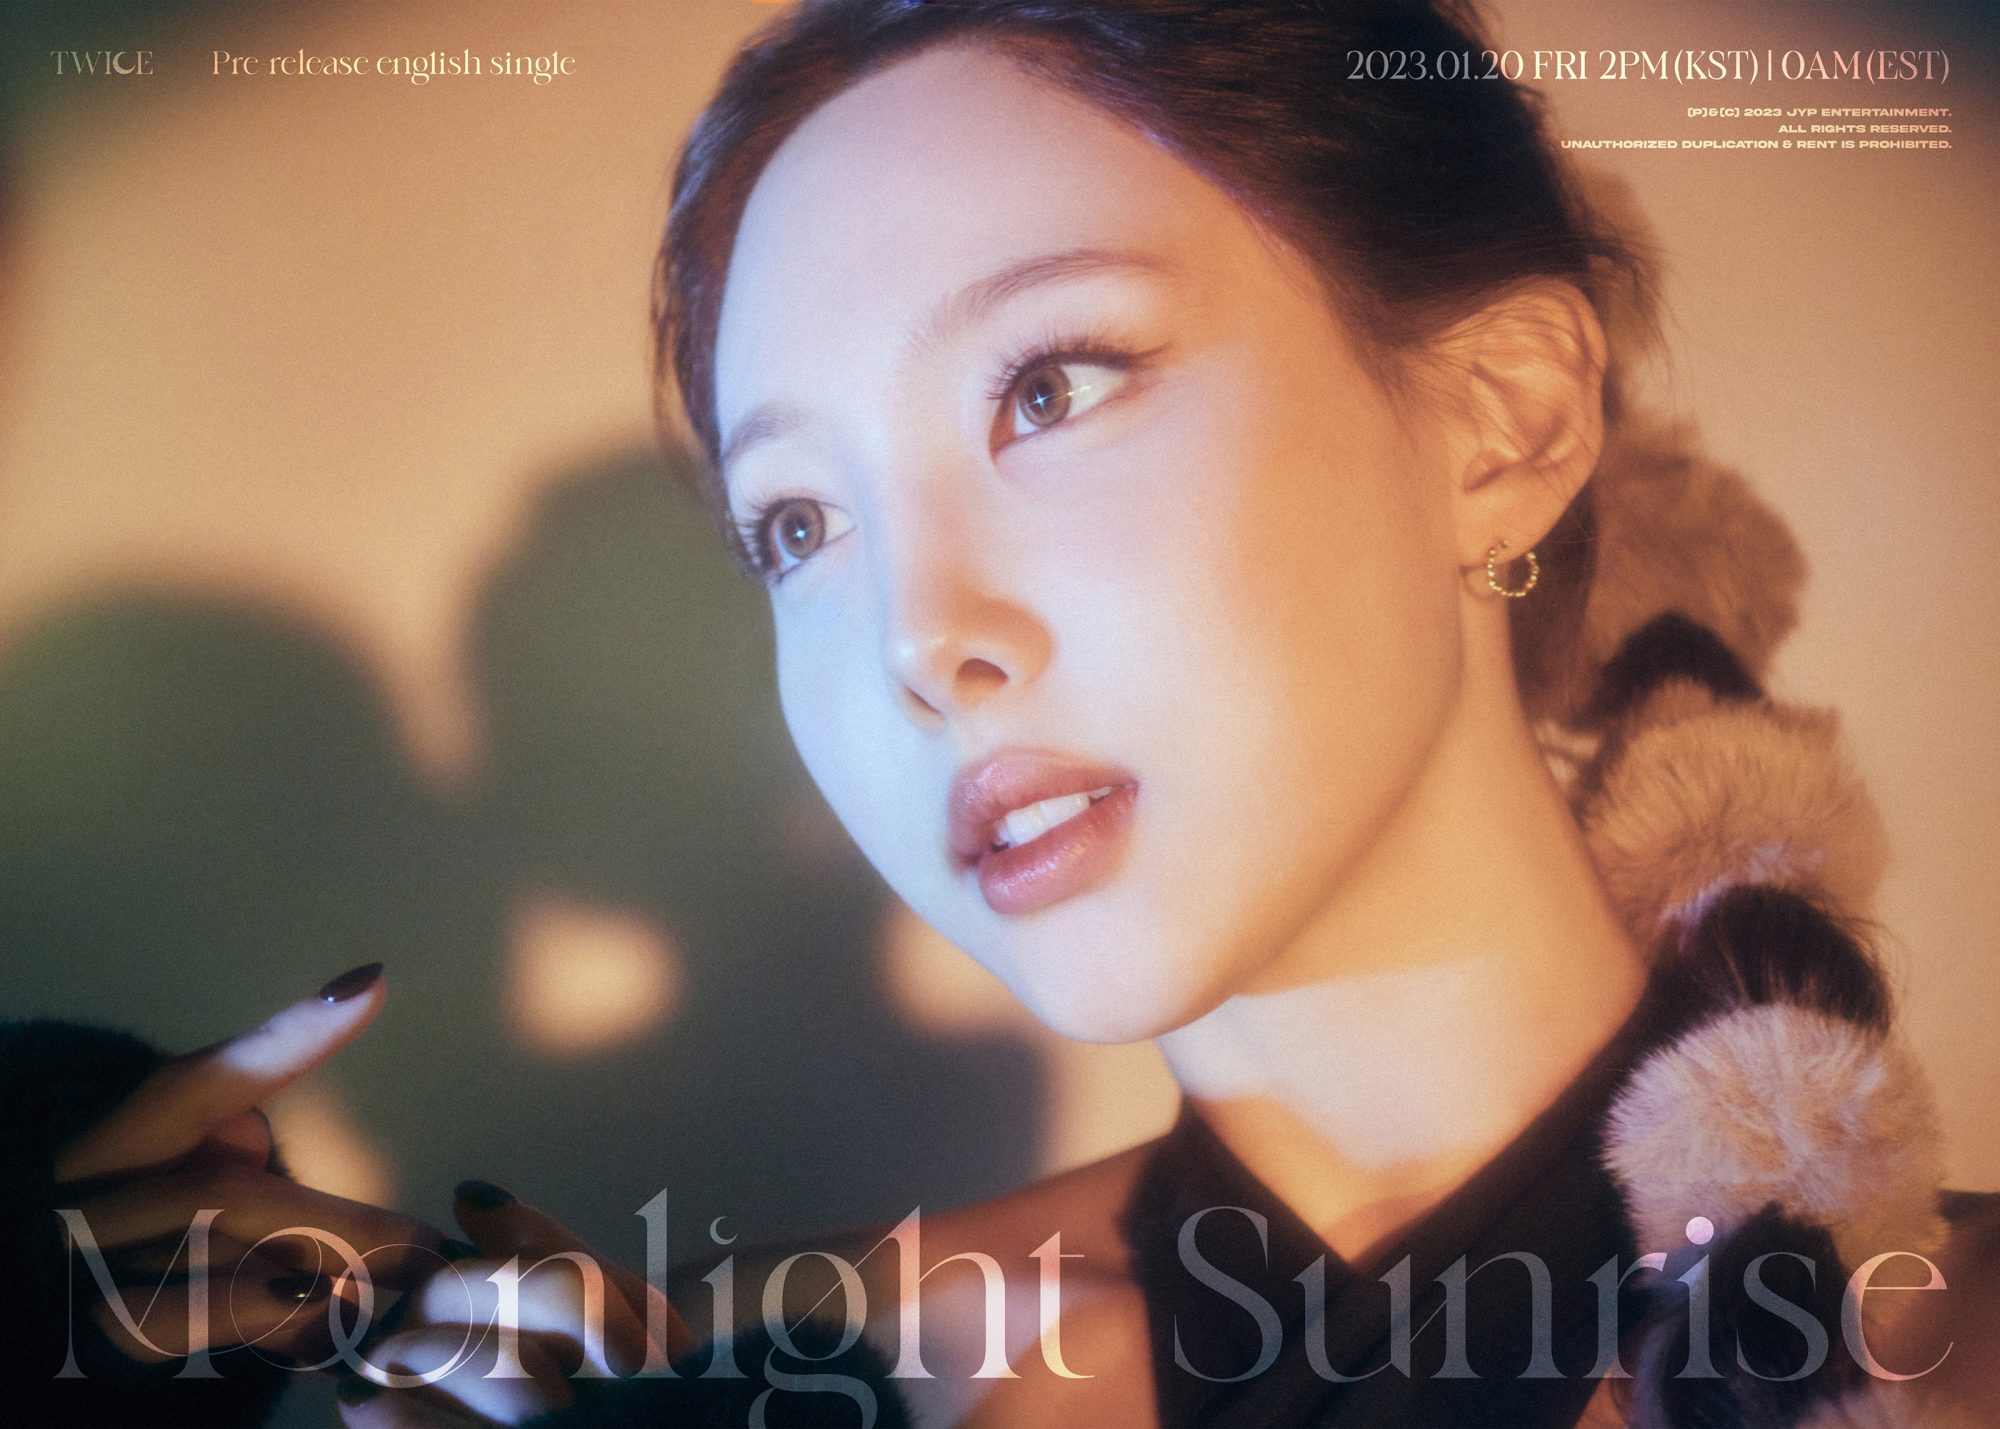 TWICE Moonlight Sunrise Teaser Photos (Nayeon, Jeongyeon, Momo) (HD/HQ